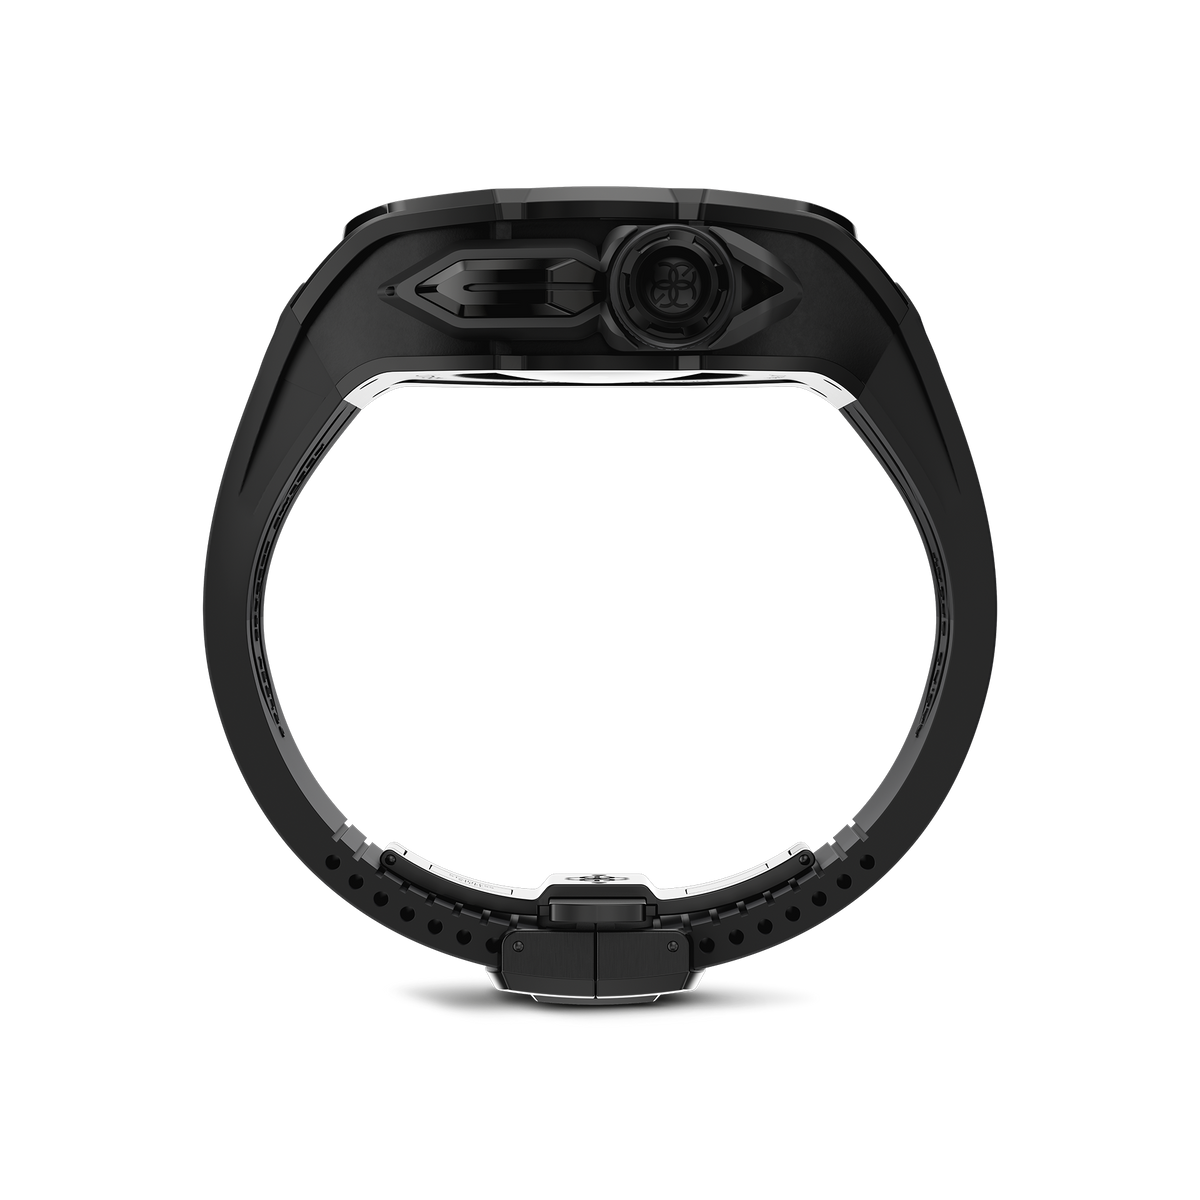 Apple Watch Case - RST49 - ONYX STEEL – ゴールデンコンセプト公式サイト